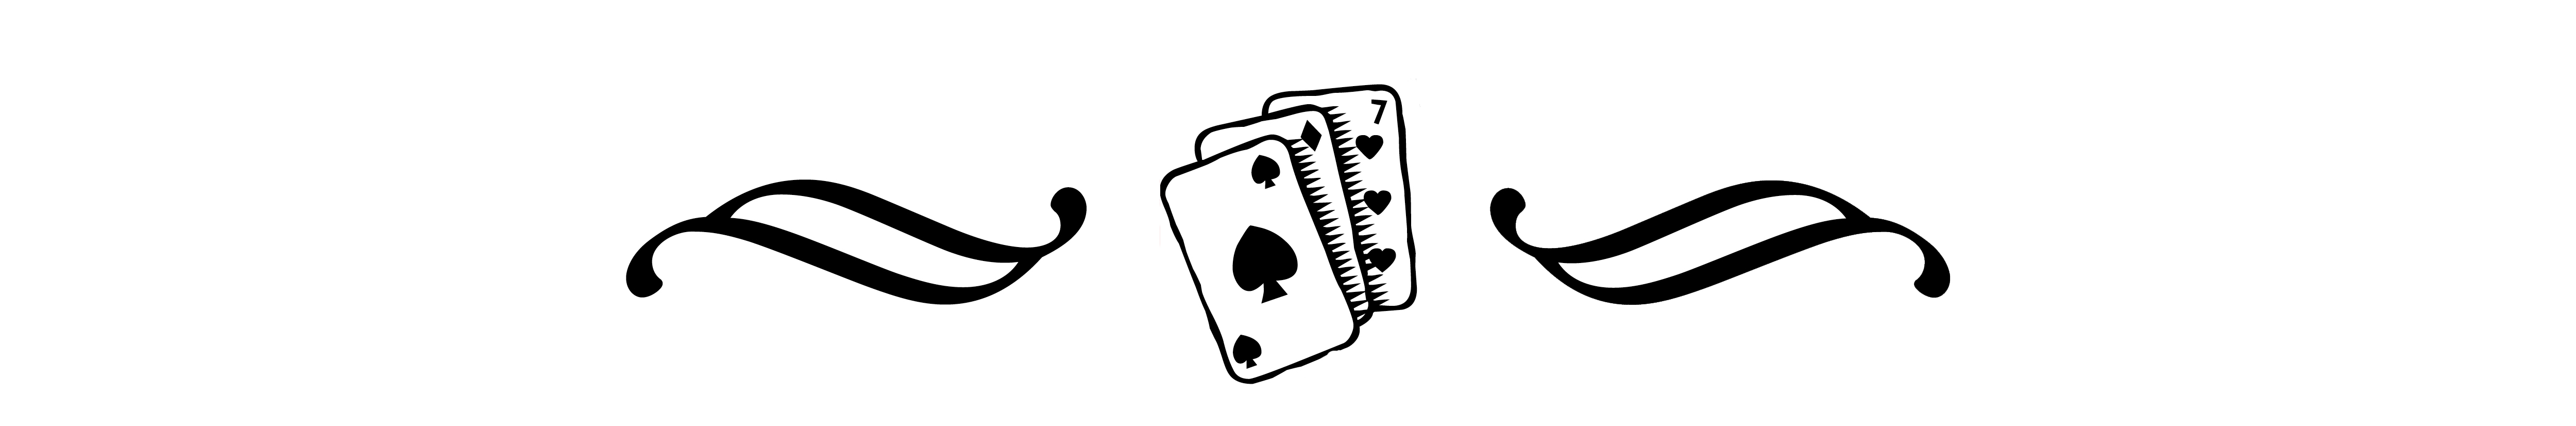 playing card divider